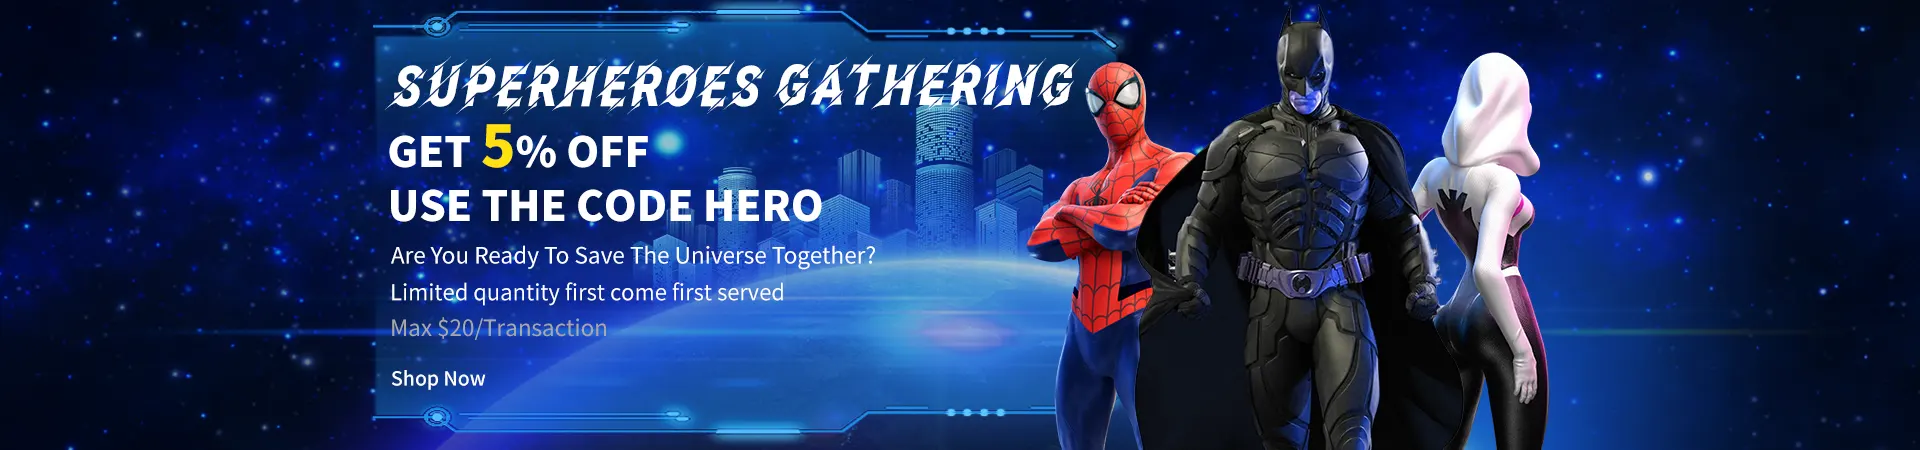 Super Heroes Gathering Get 5% Off 